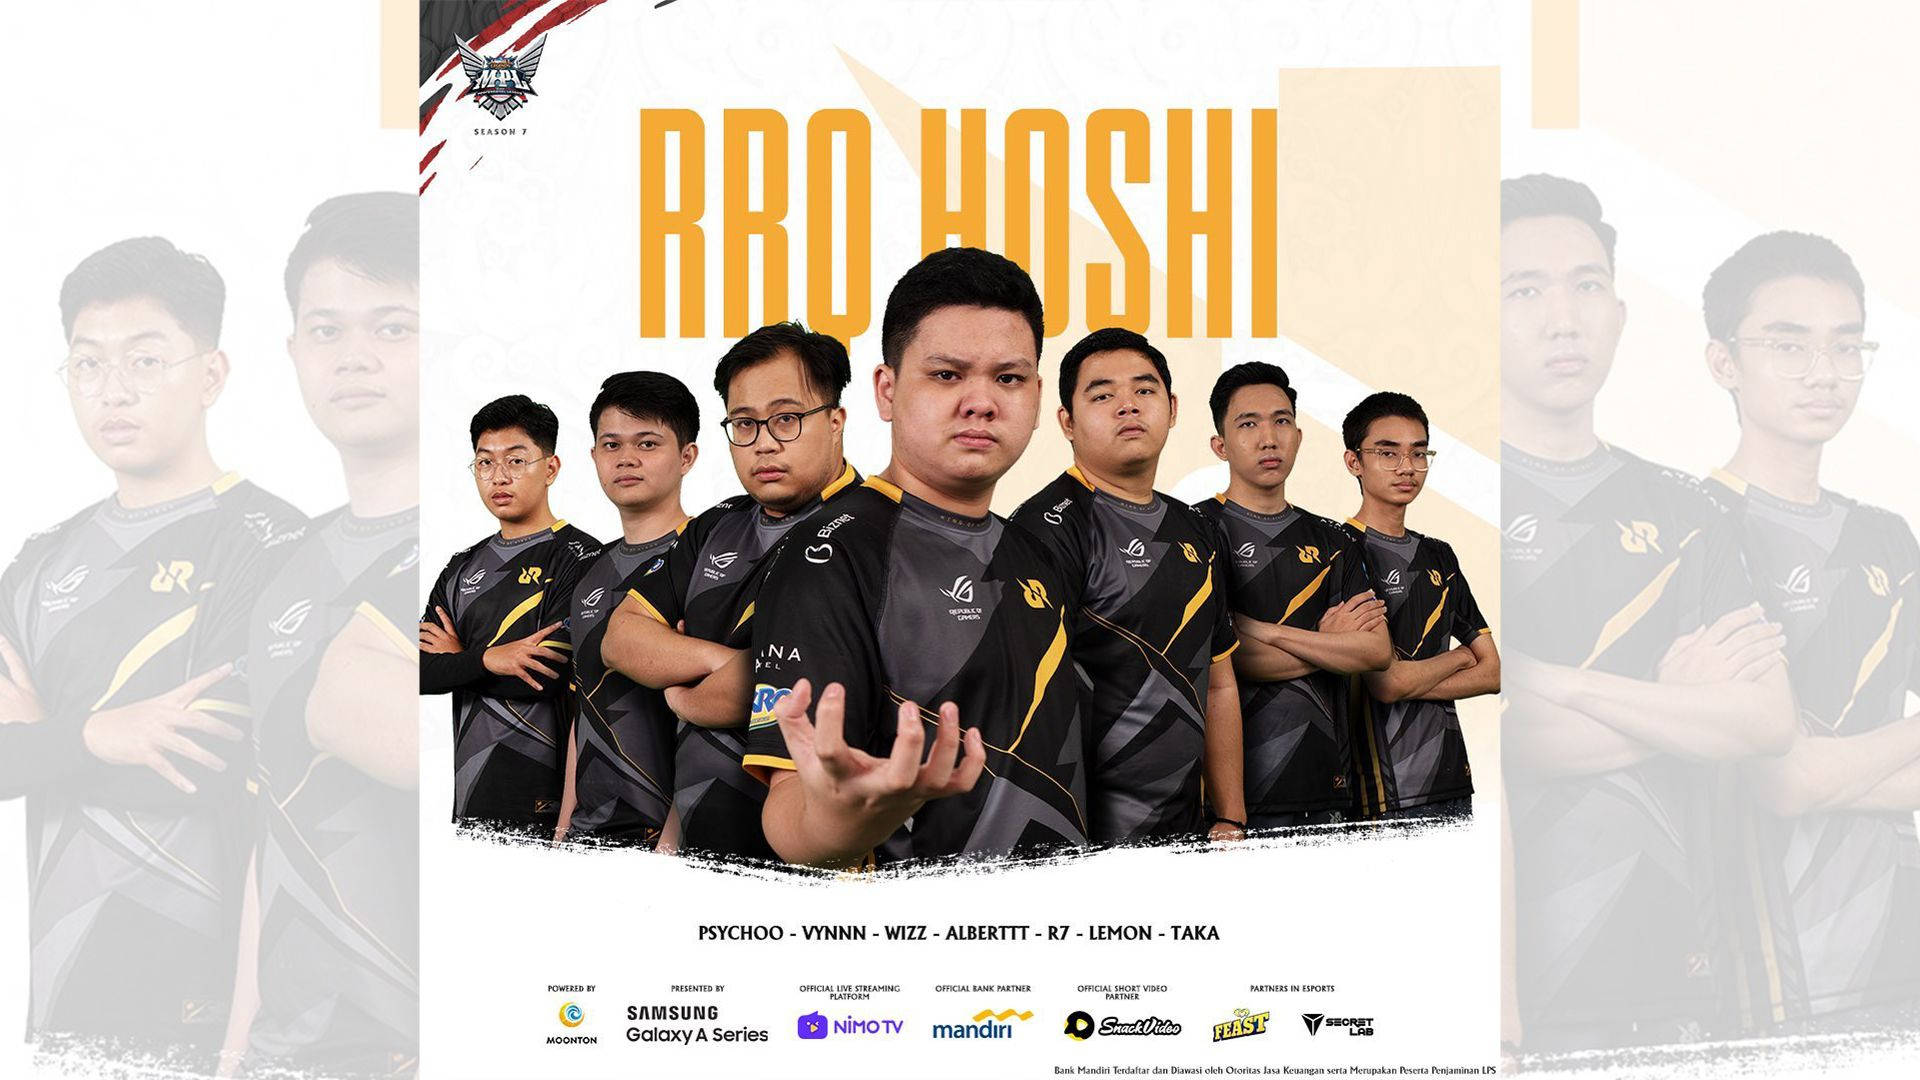 Gorgeous Poster Of Rrq Team